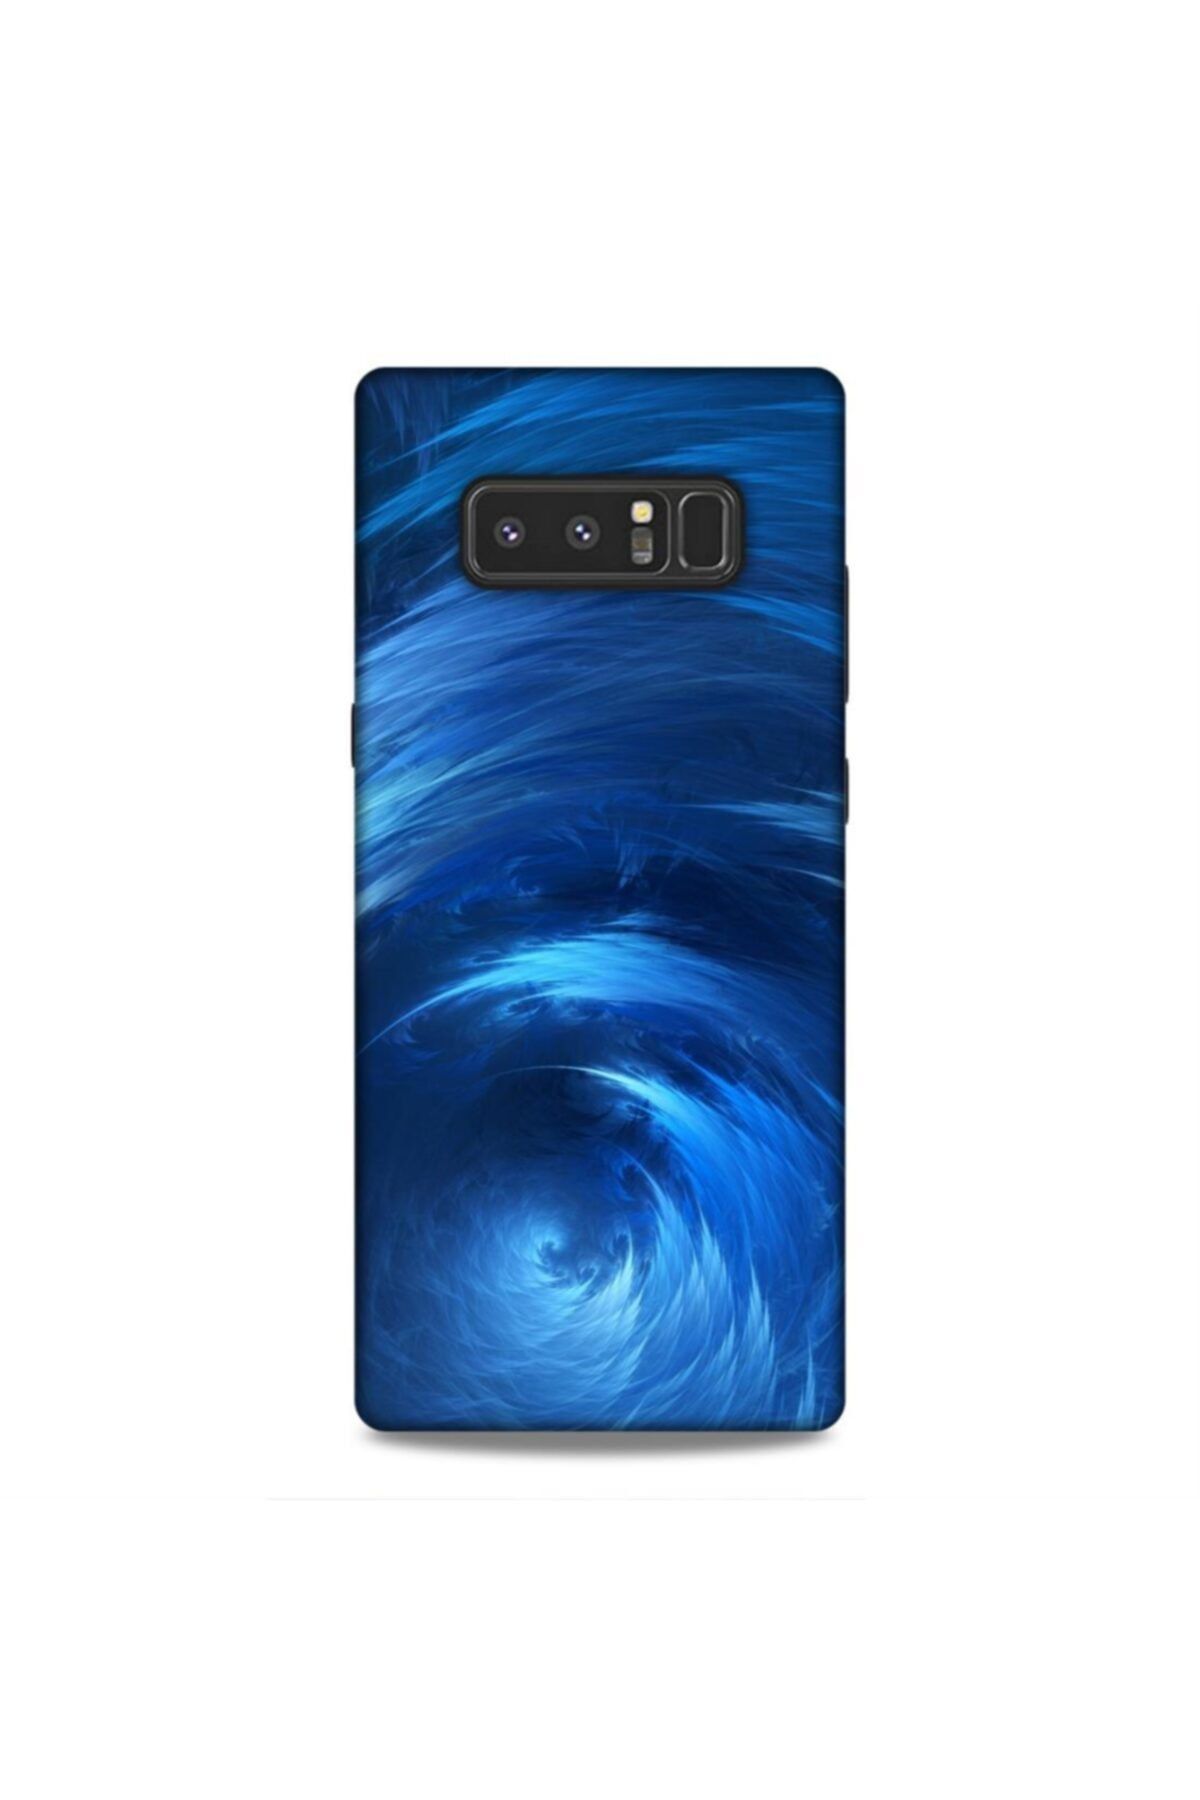 Pickcase Samsung Galaxy Note 8 Kılıf Desenli Arka Kapak Mavi Dalga